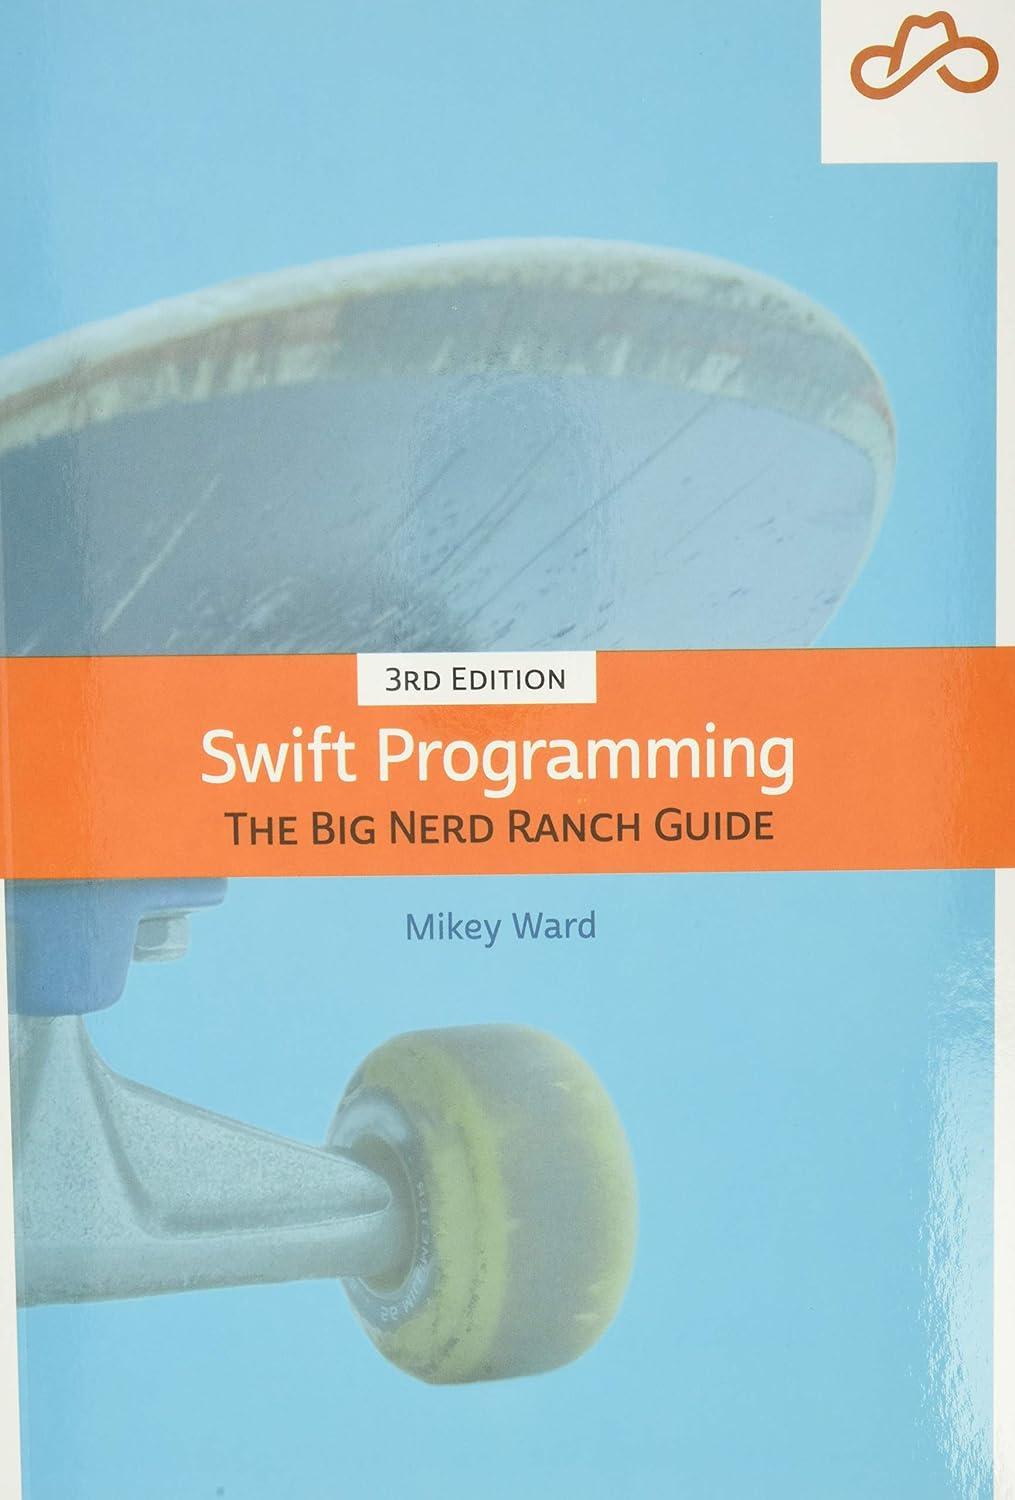 swift programming the big nerd ranch guide 3rd edition matthew mathias, mikey ward, john gallagher